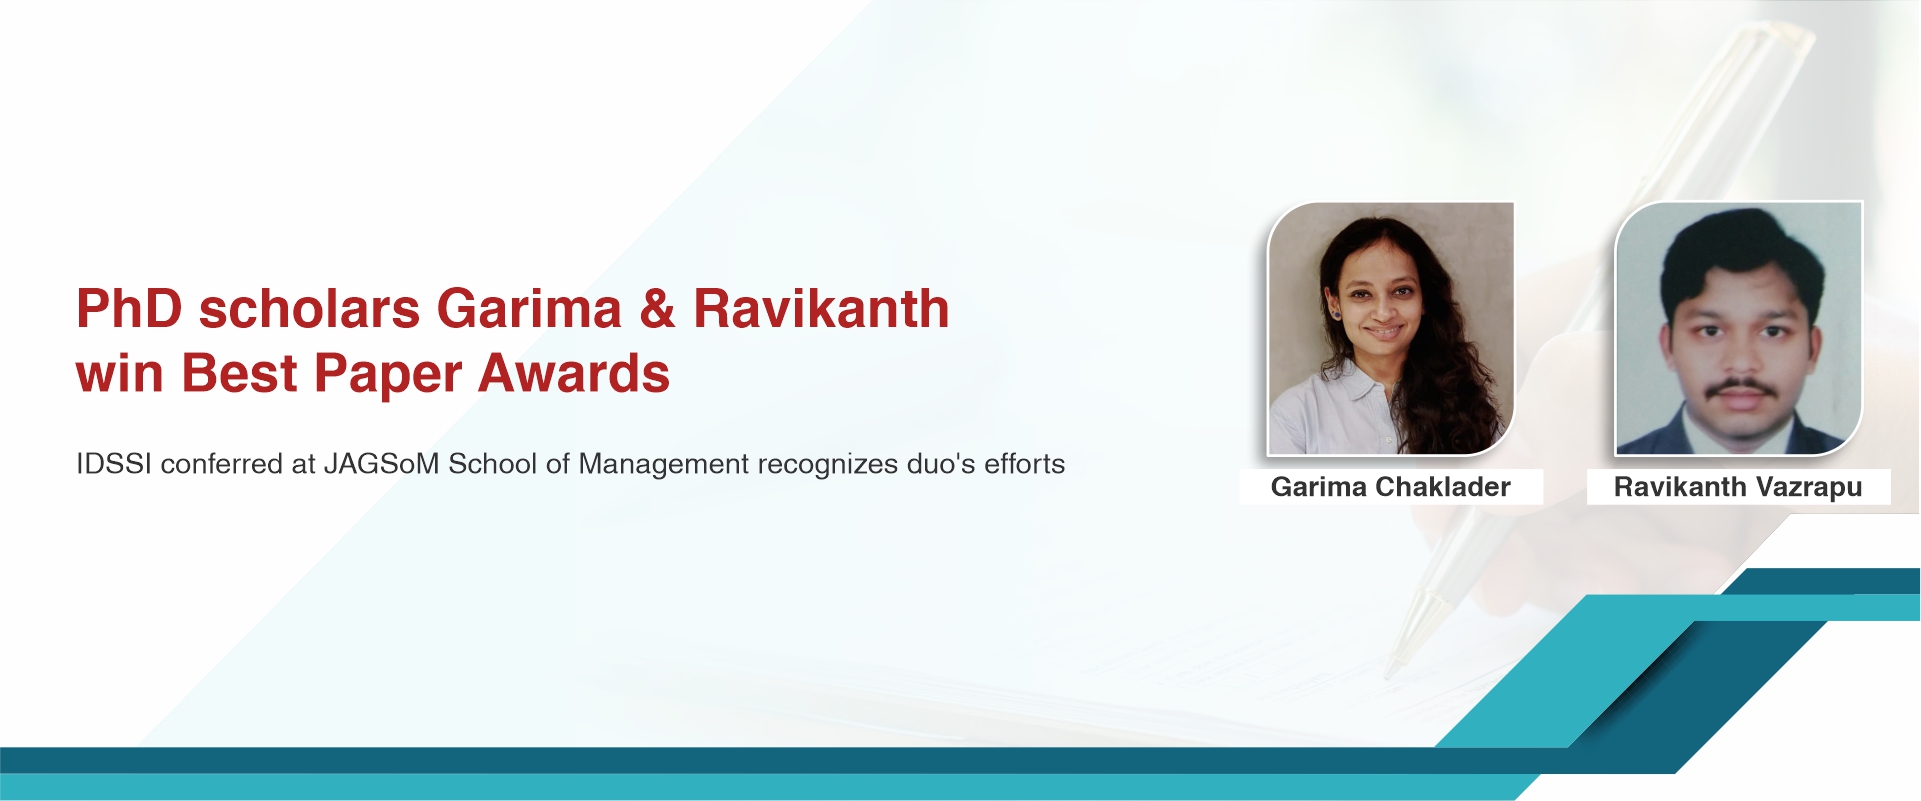 PhD scholars Garima & Ravikanth win Best Paper Awards